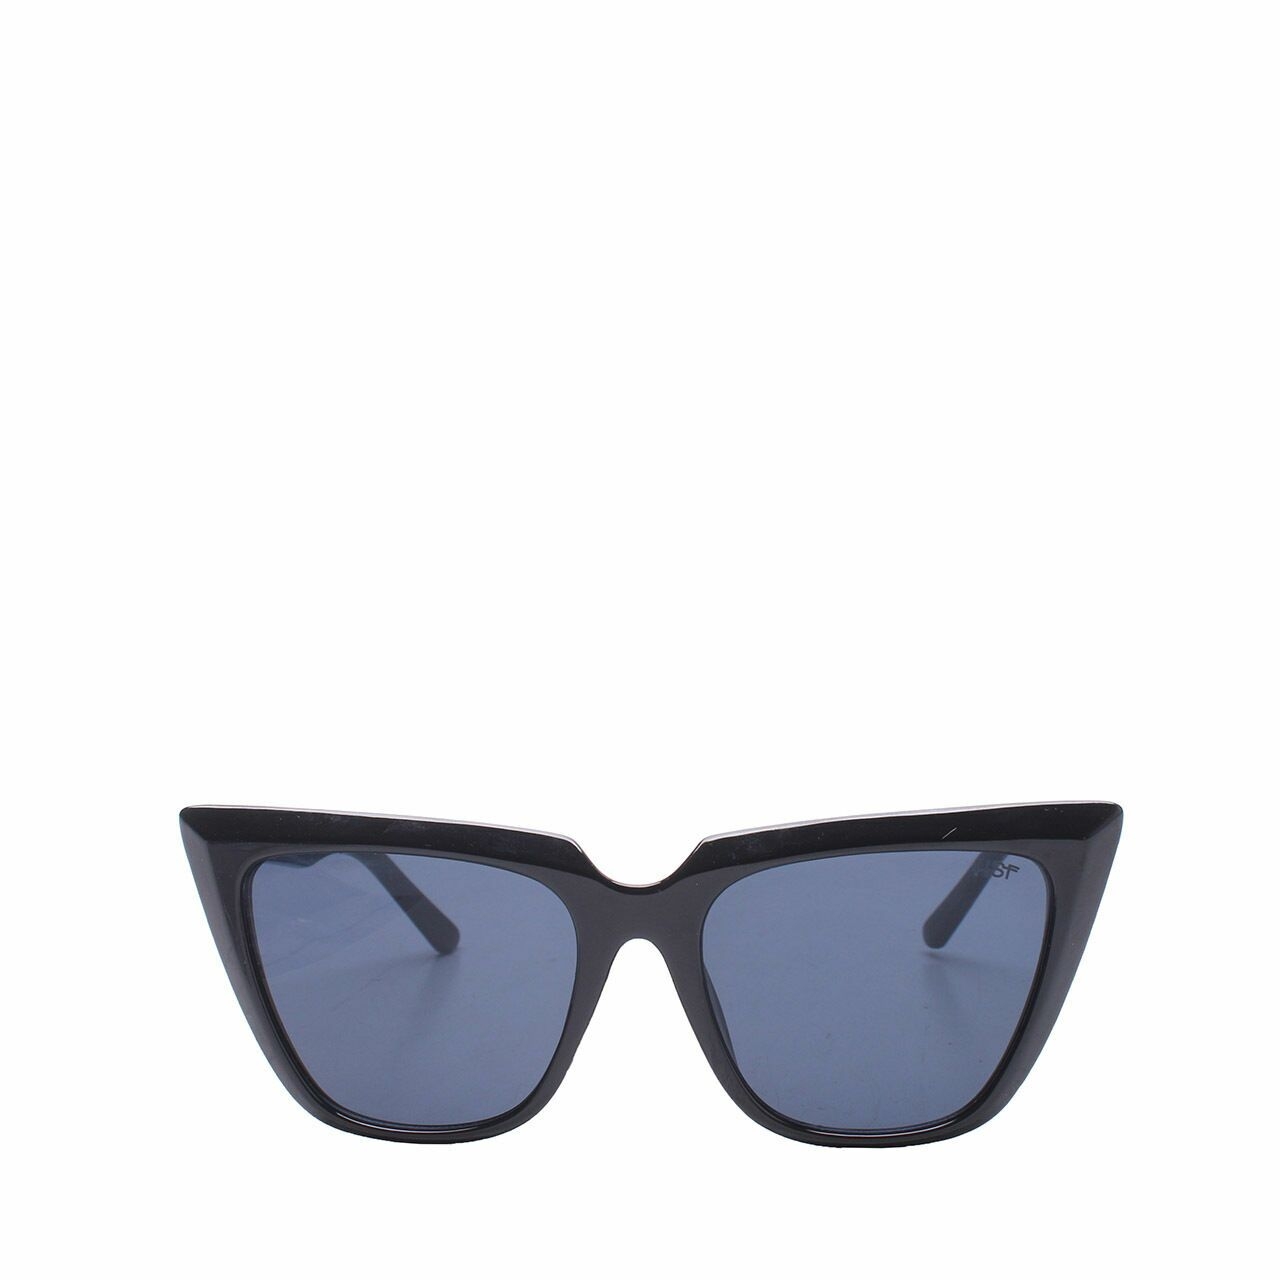 HSF Black Sunglasses